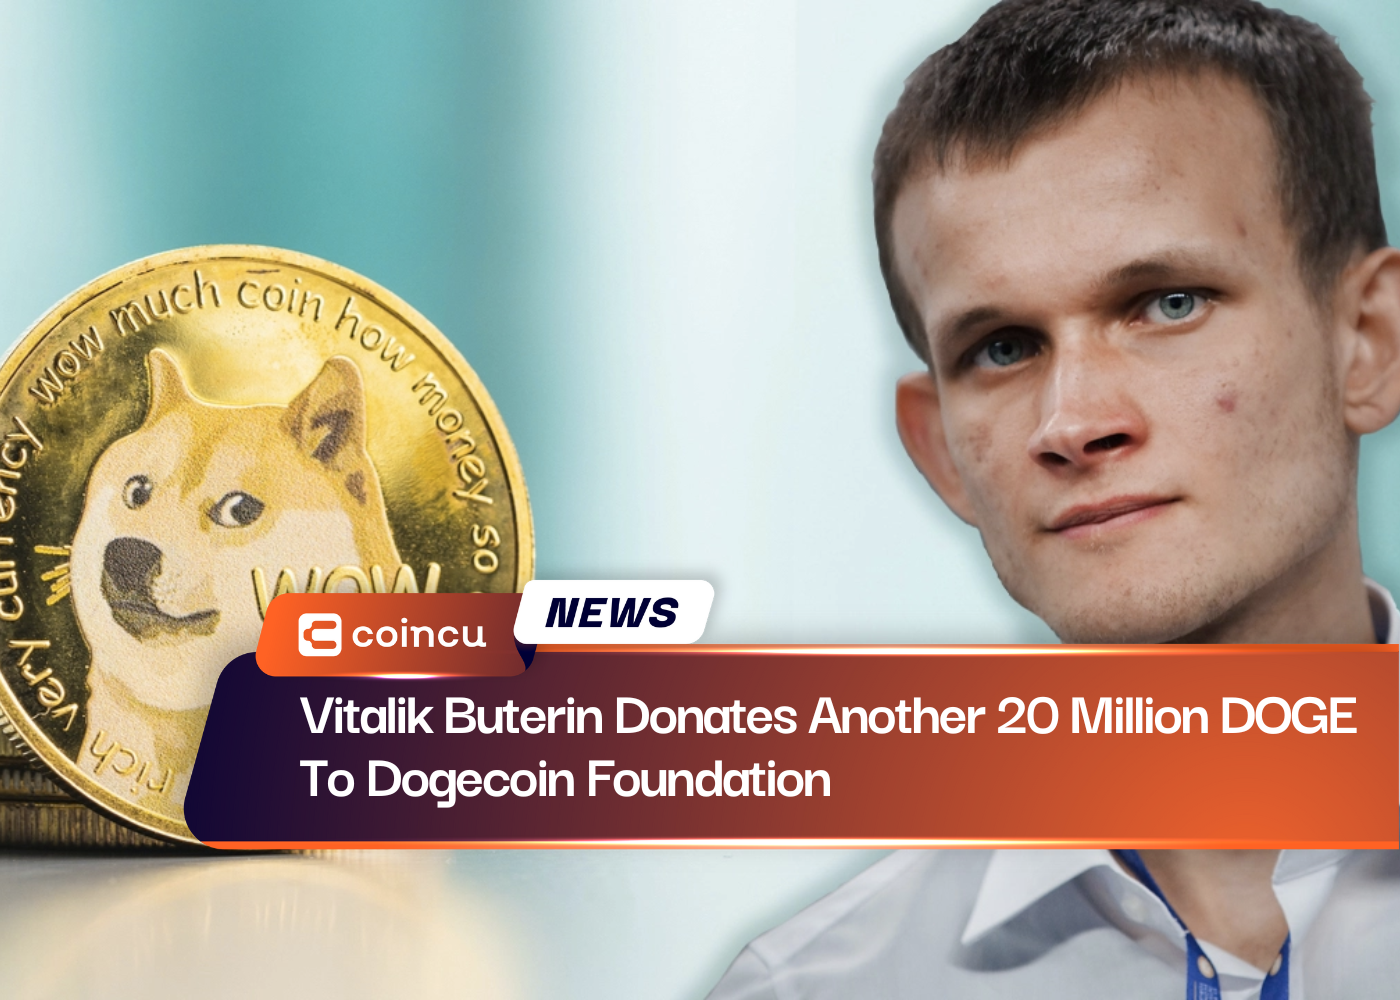 Vitalik Buterin doa mais 20 milhões de DOGE para a Dogecoin Foundation